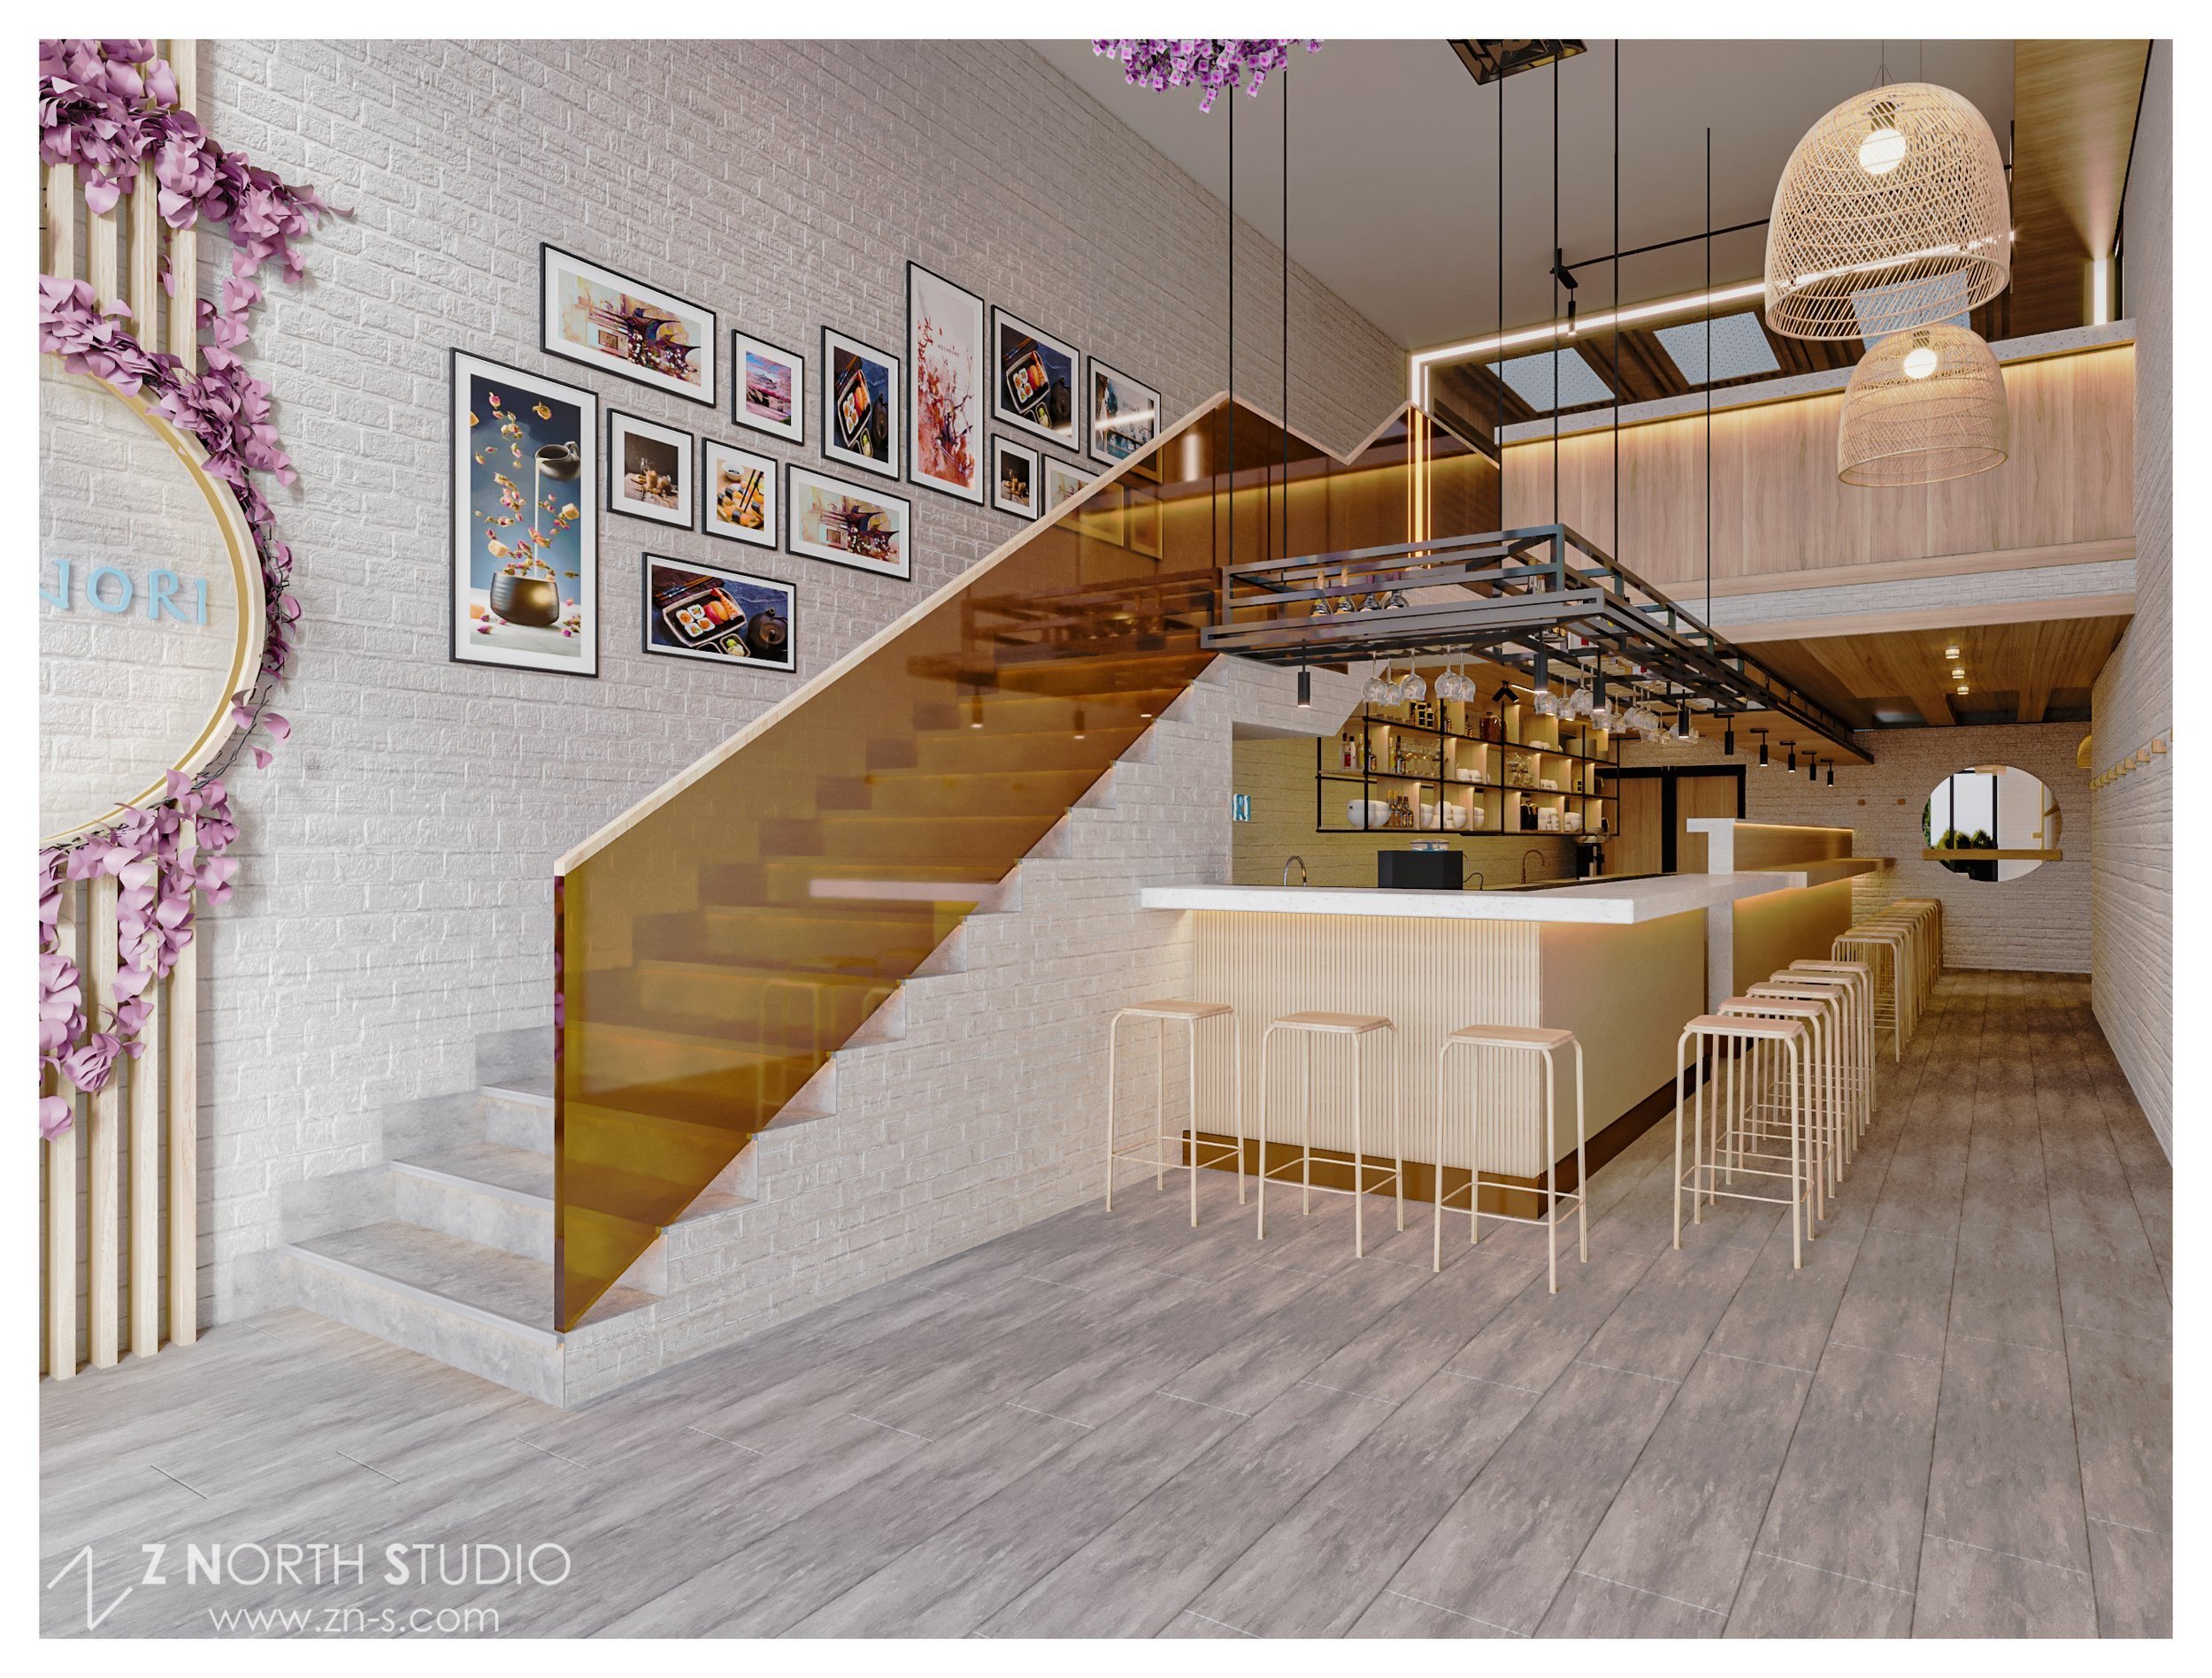 Umai+Nori+Restaurant+Design+Z+North+Studio+%285%29.jpg